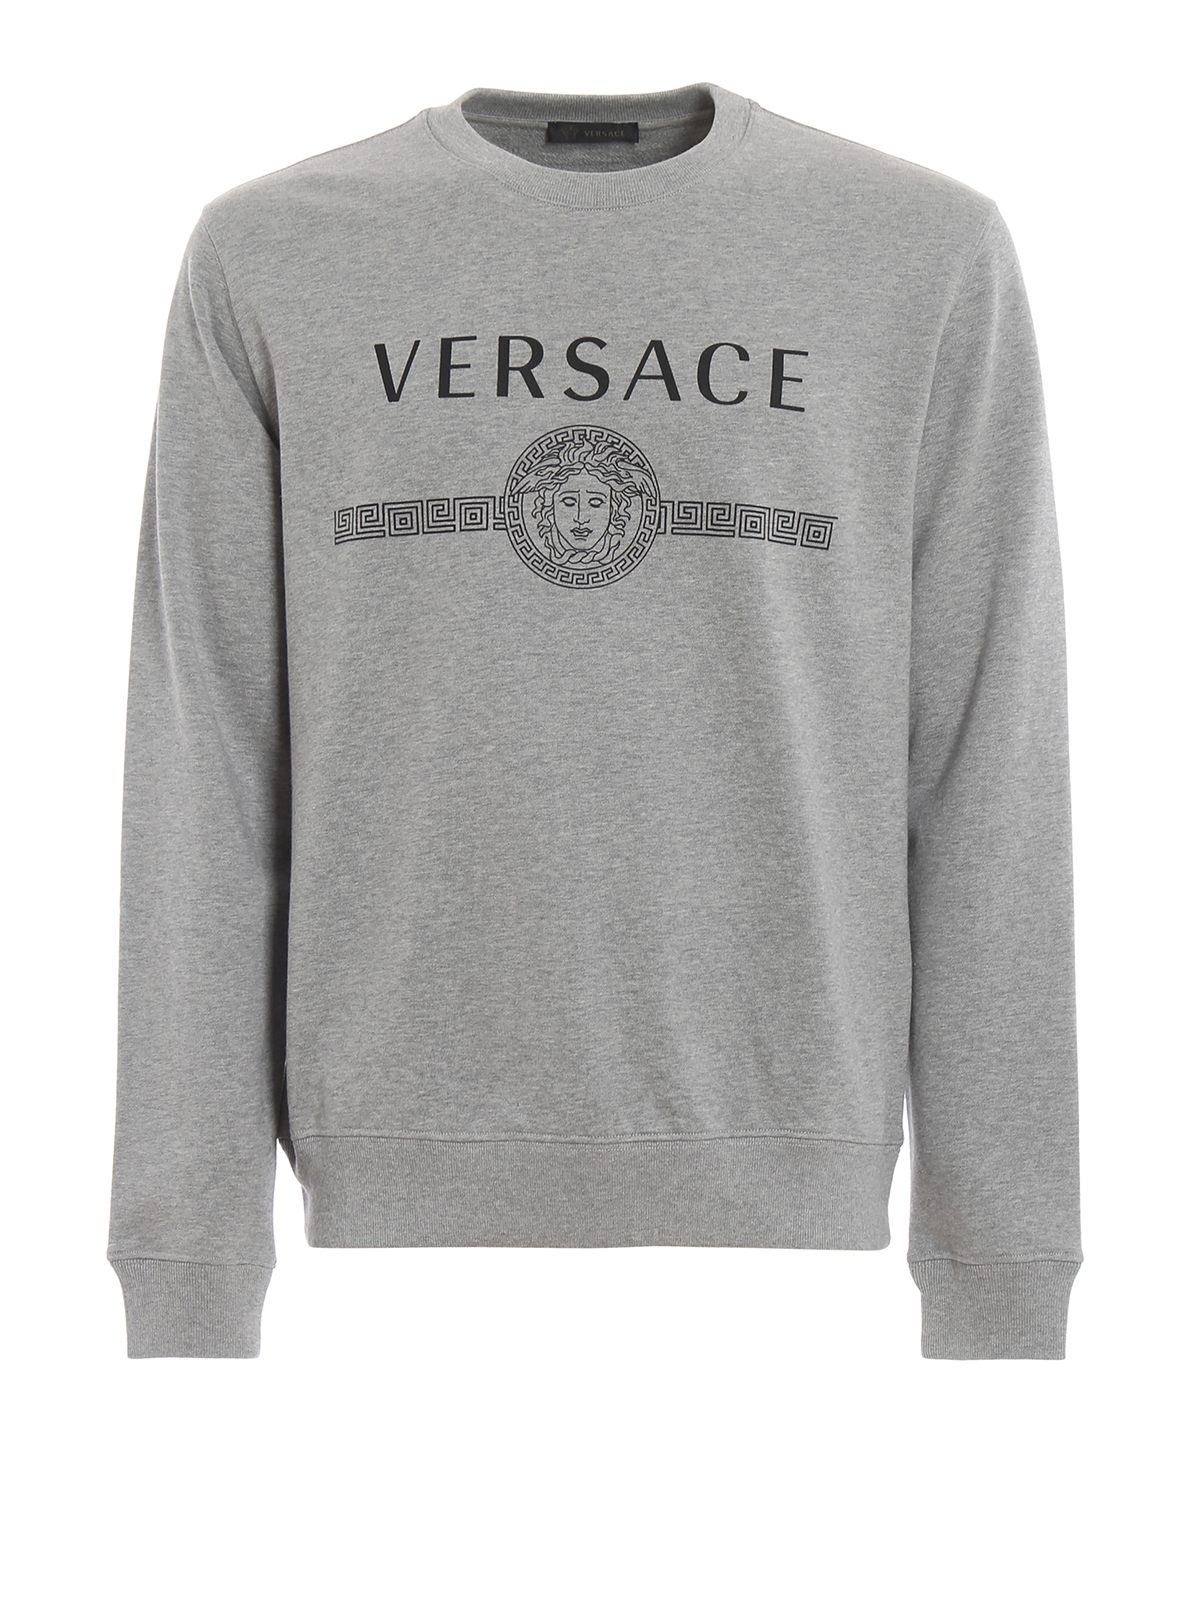 Versace - Medusa Head and logo print 